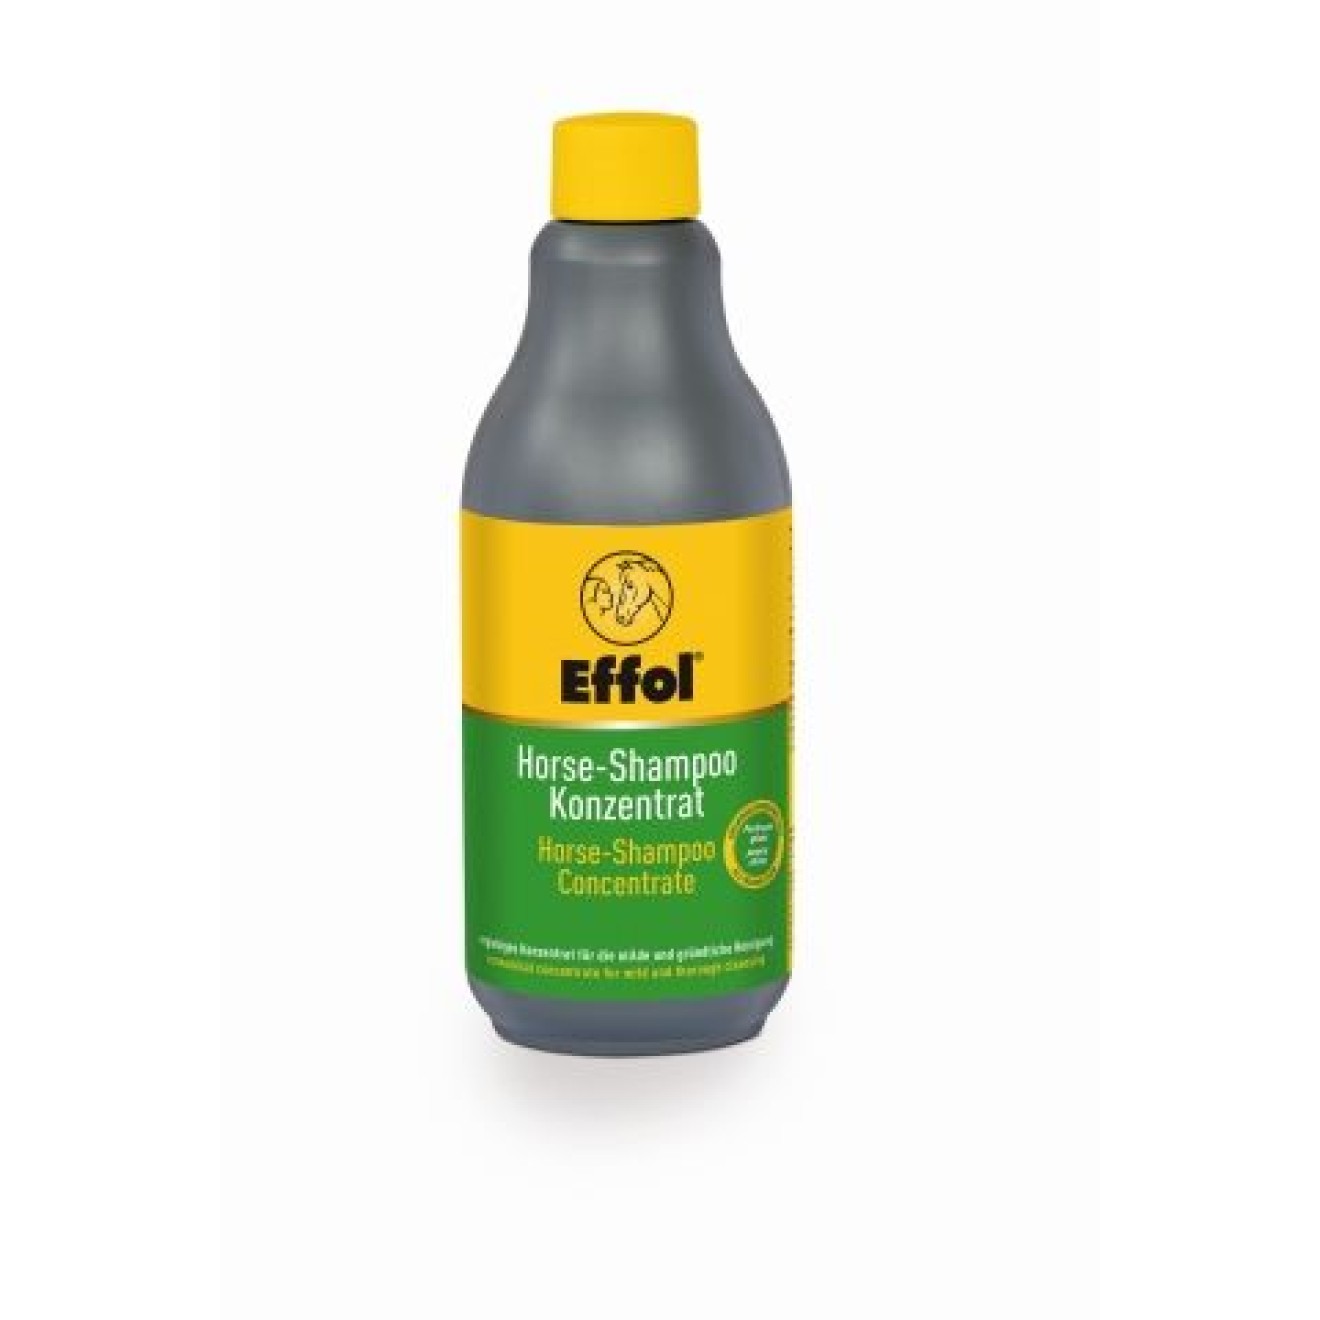 Effol Horse-Shampoo Konzentrat 500ml